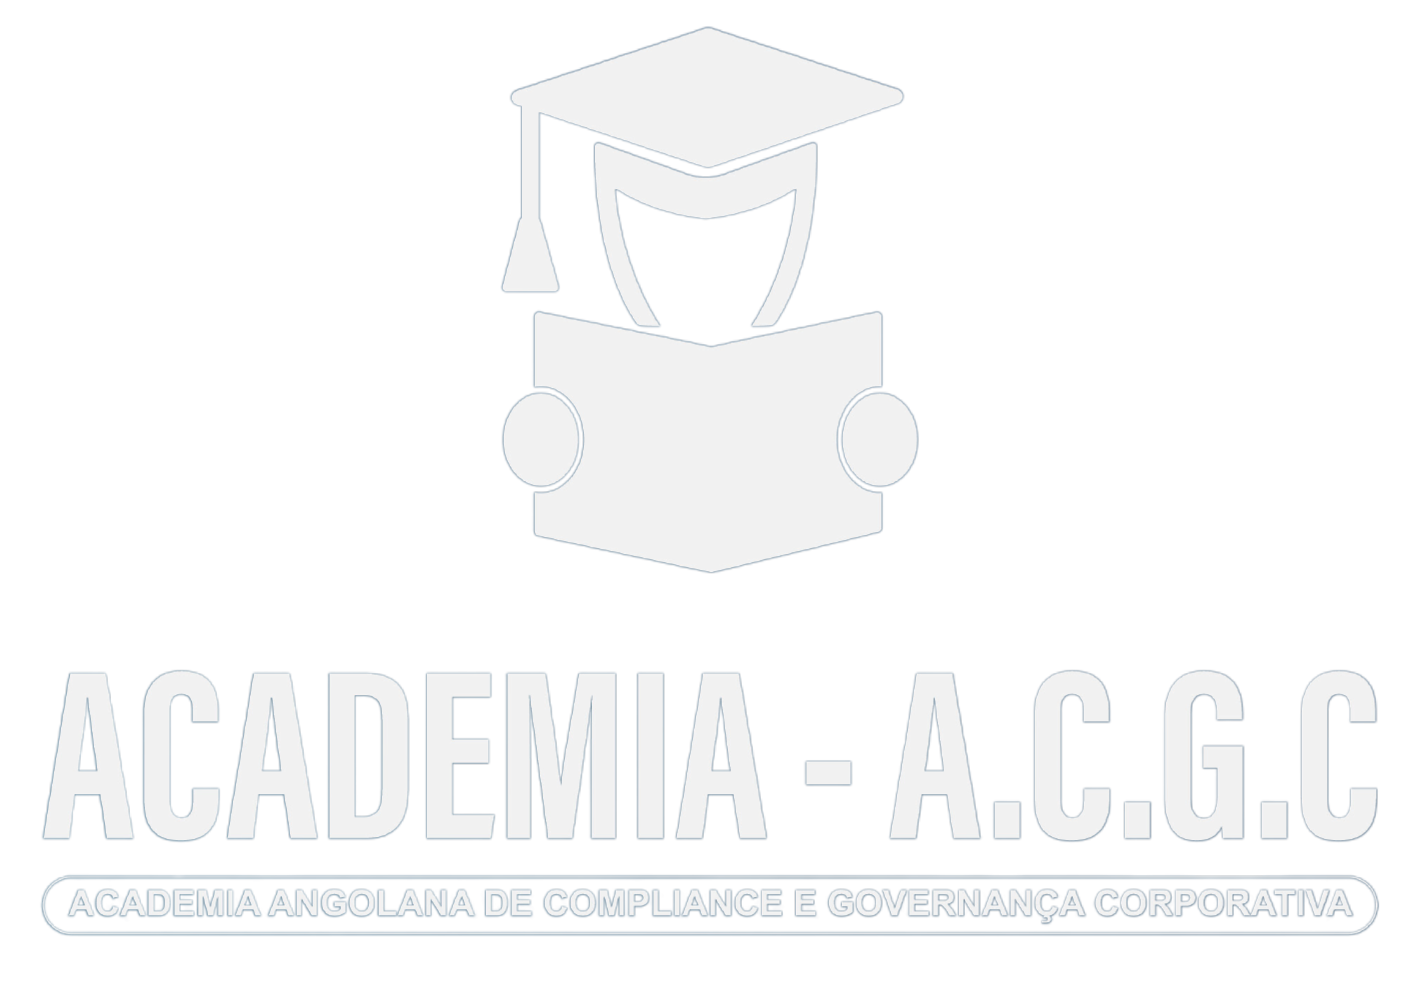 Academia -A.C.G.C